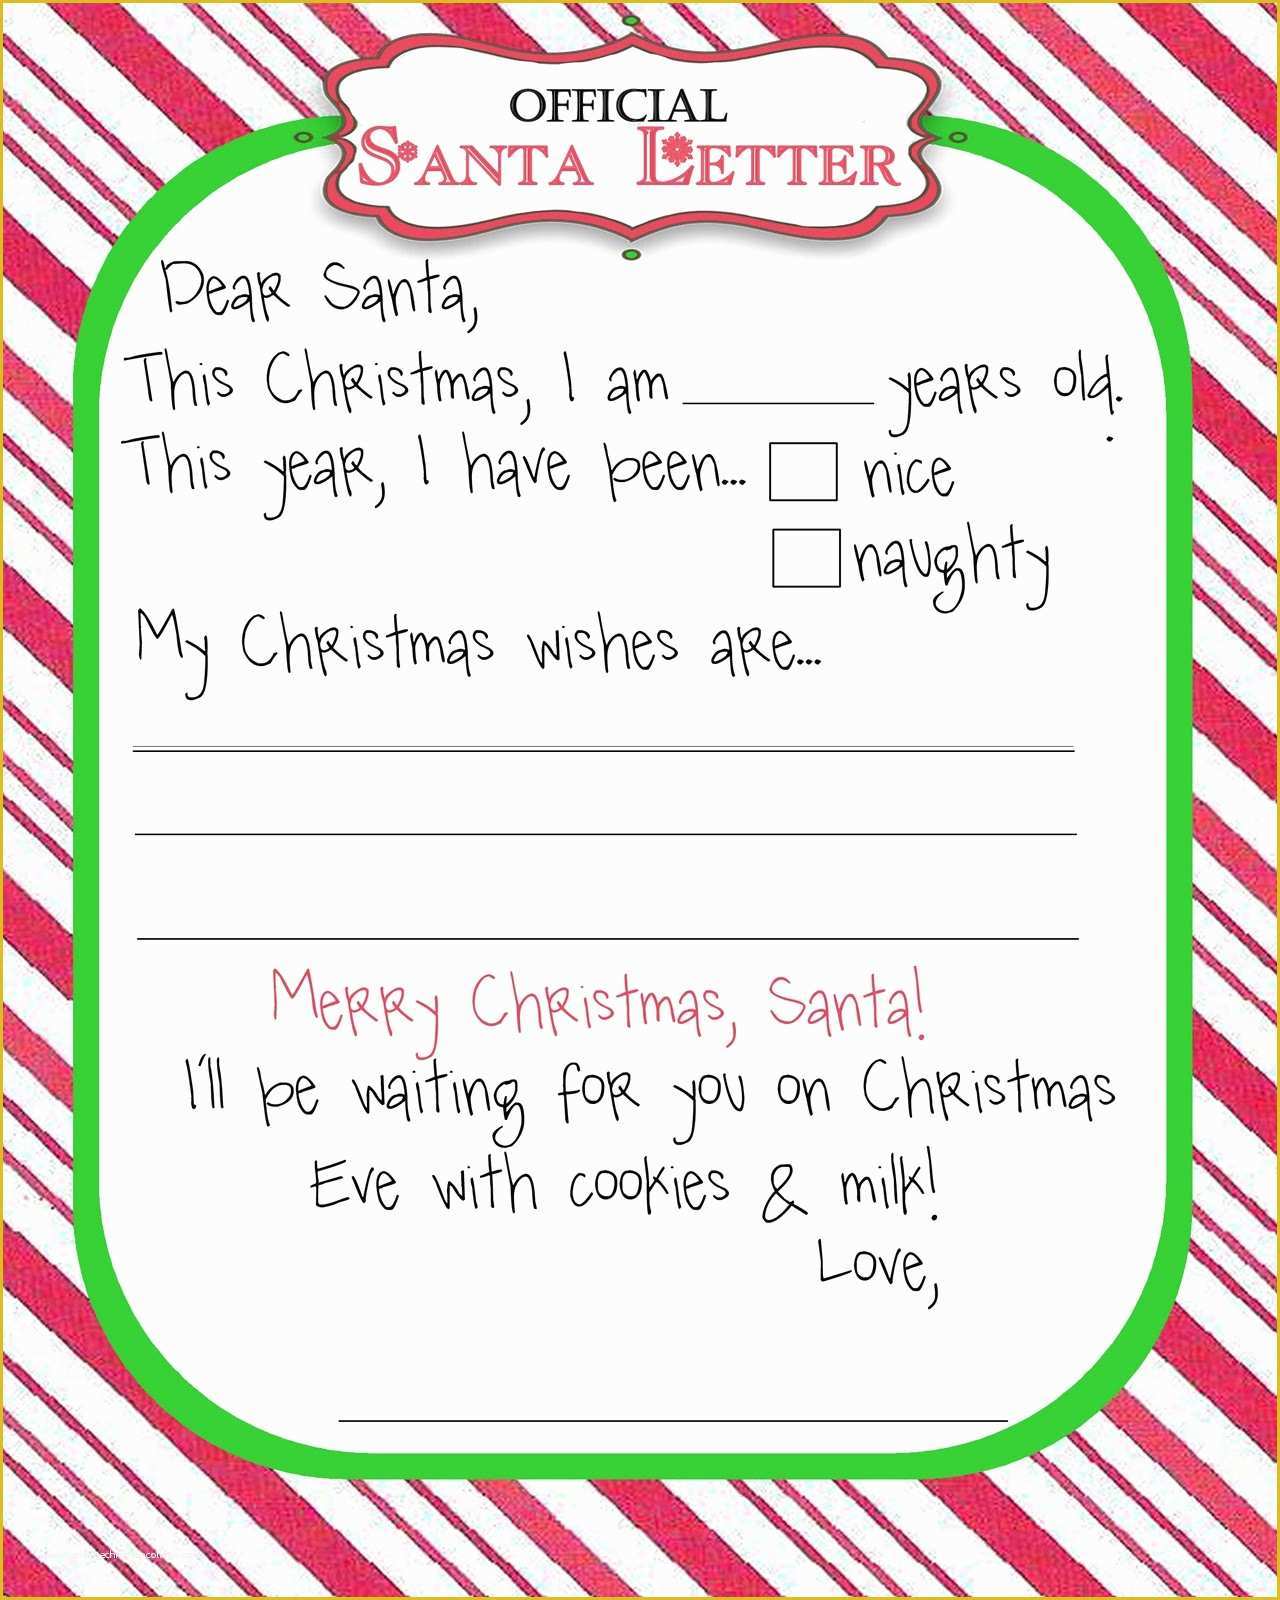 Dear Santa Letter Template Free Of Free Printable Dear Santa Letter Templates Hd Writing Co